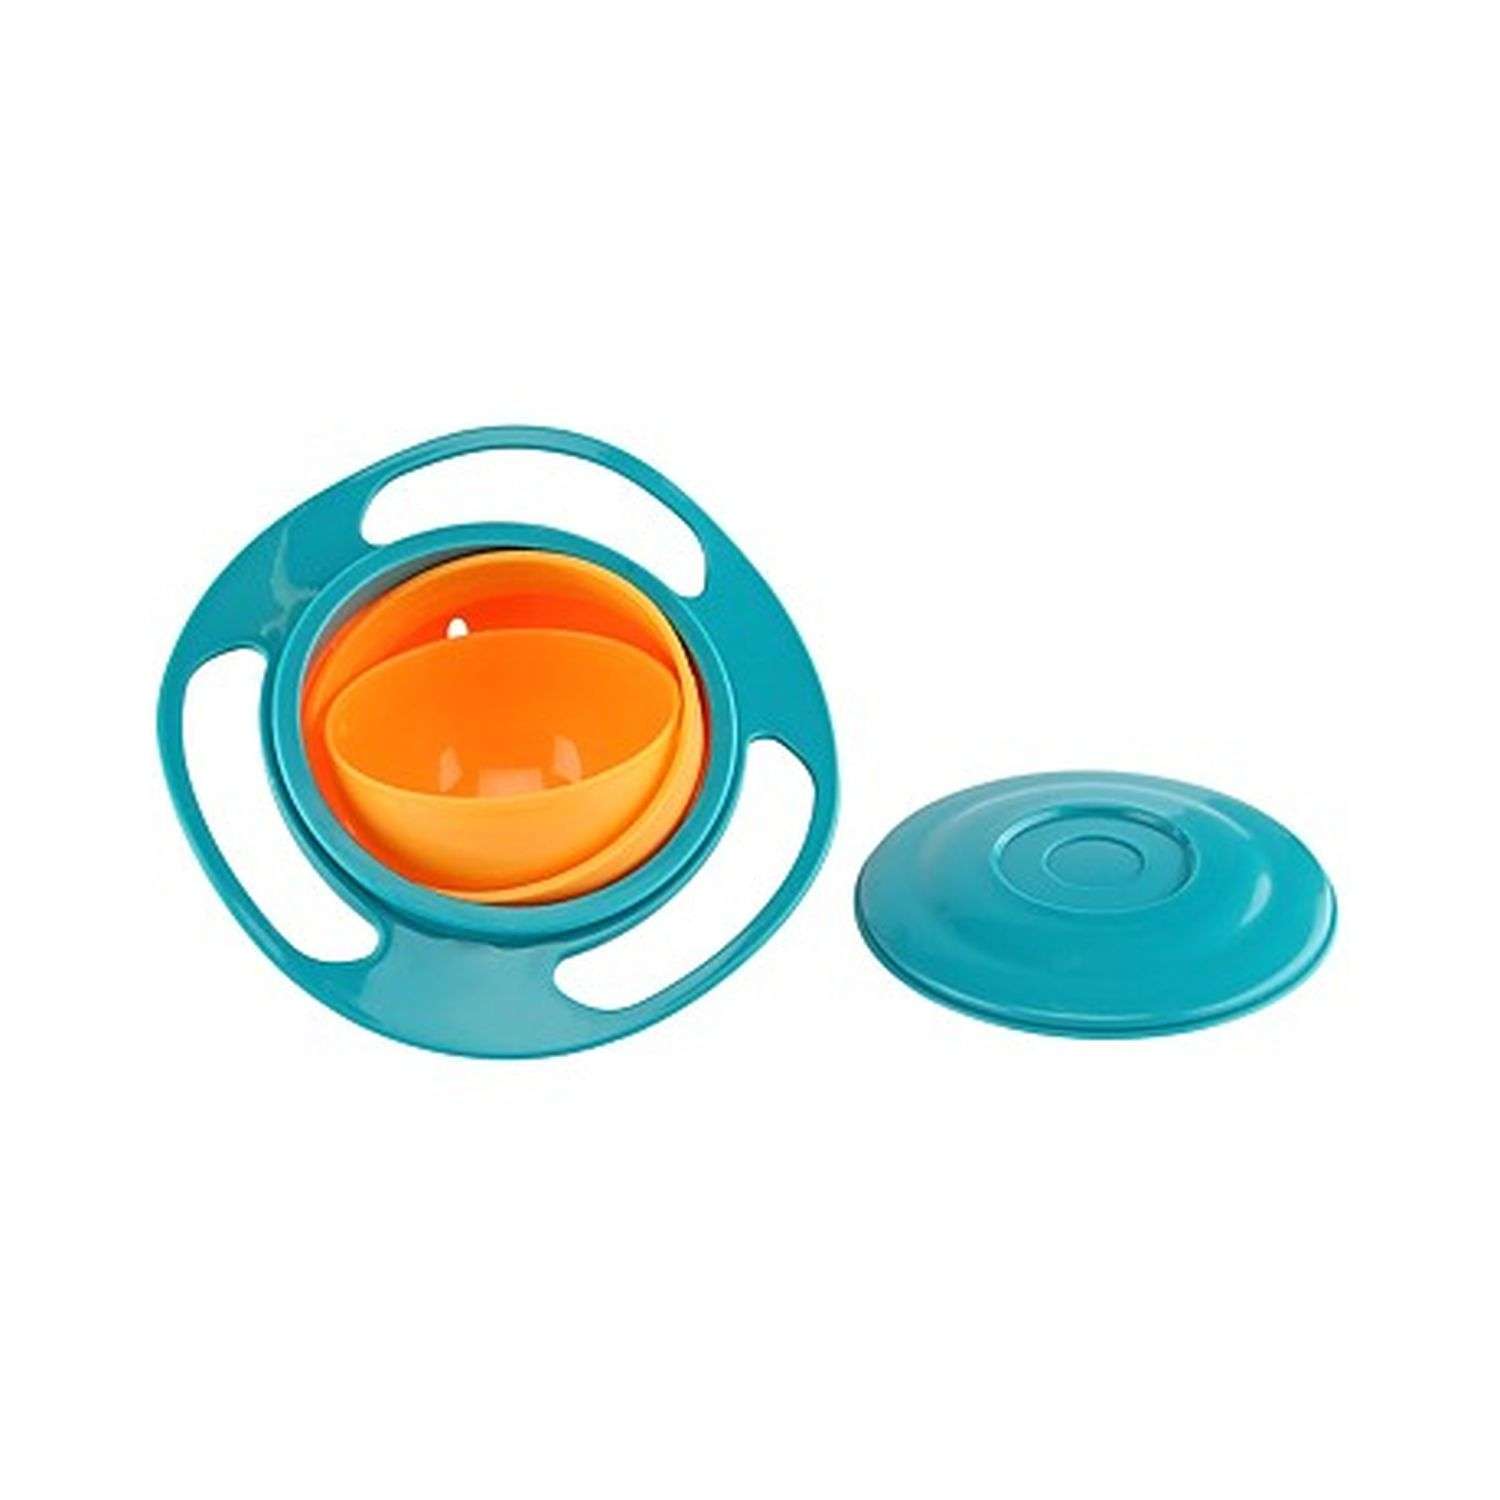 Тарелка-непроливайка Uniglodis Цвет: синий/оранжевый - фото 2